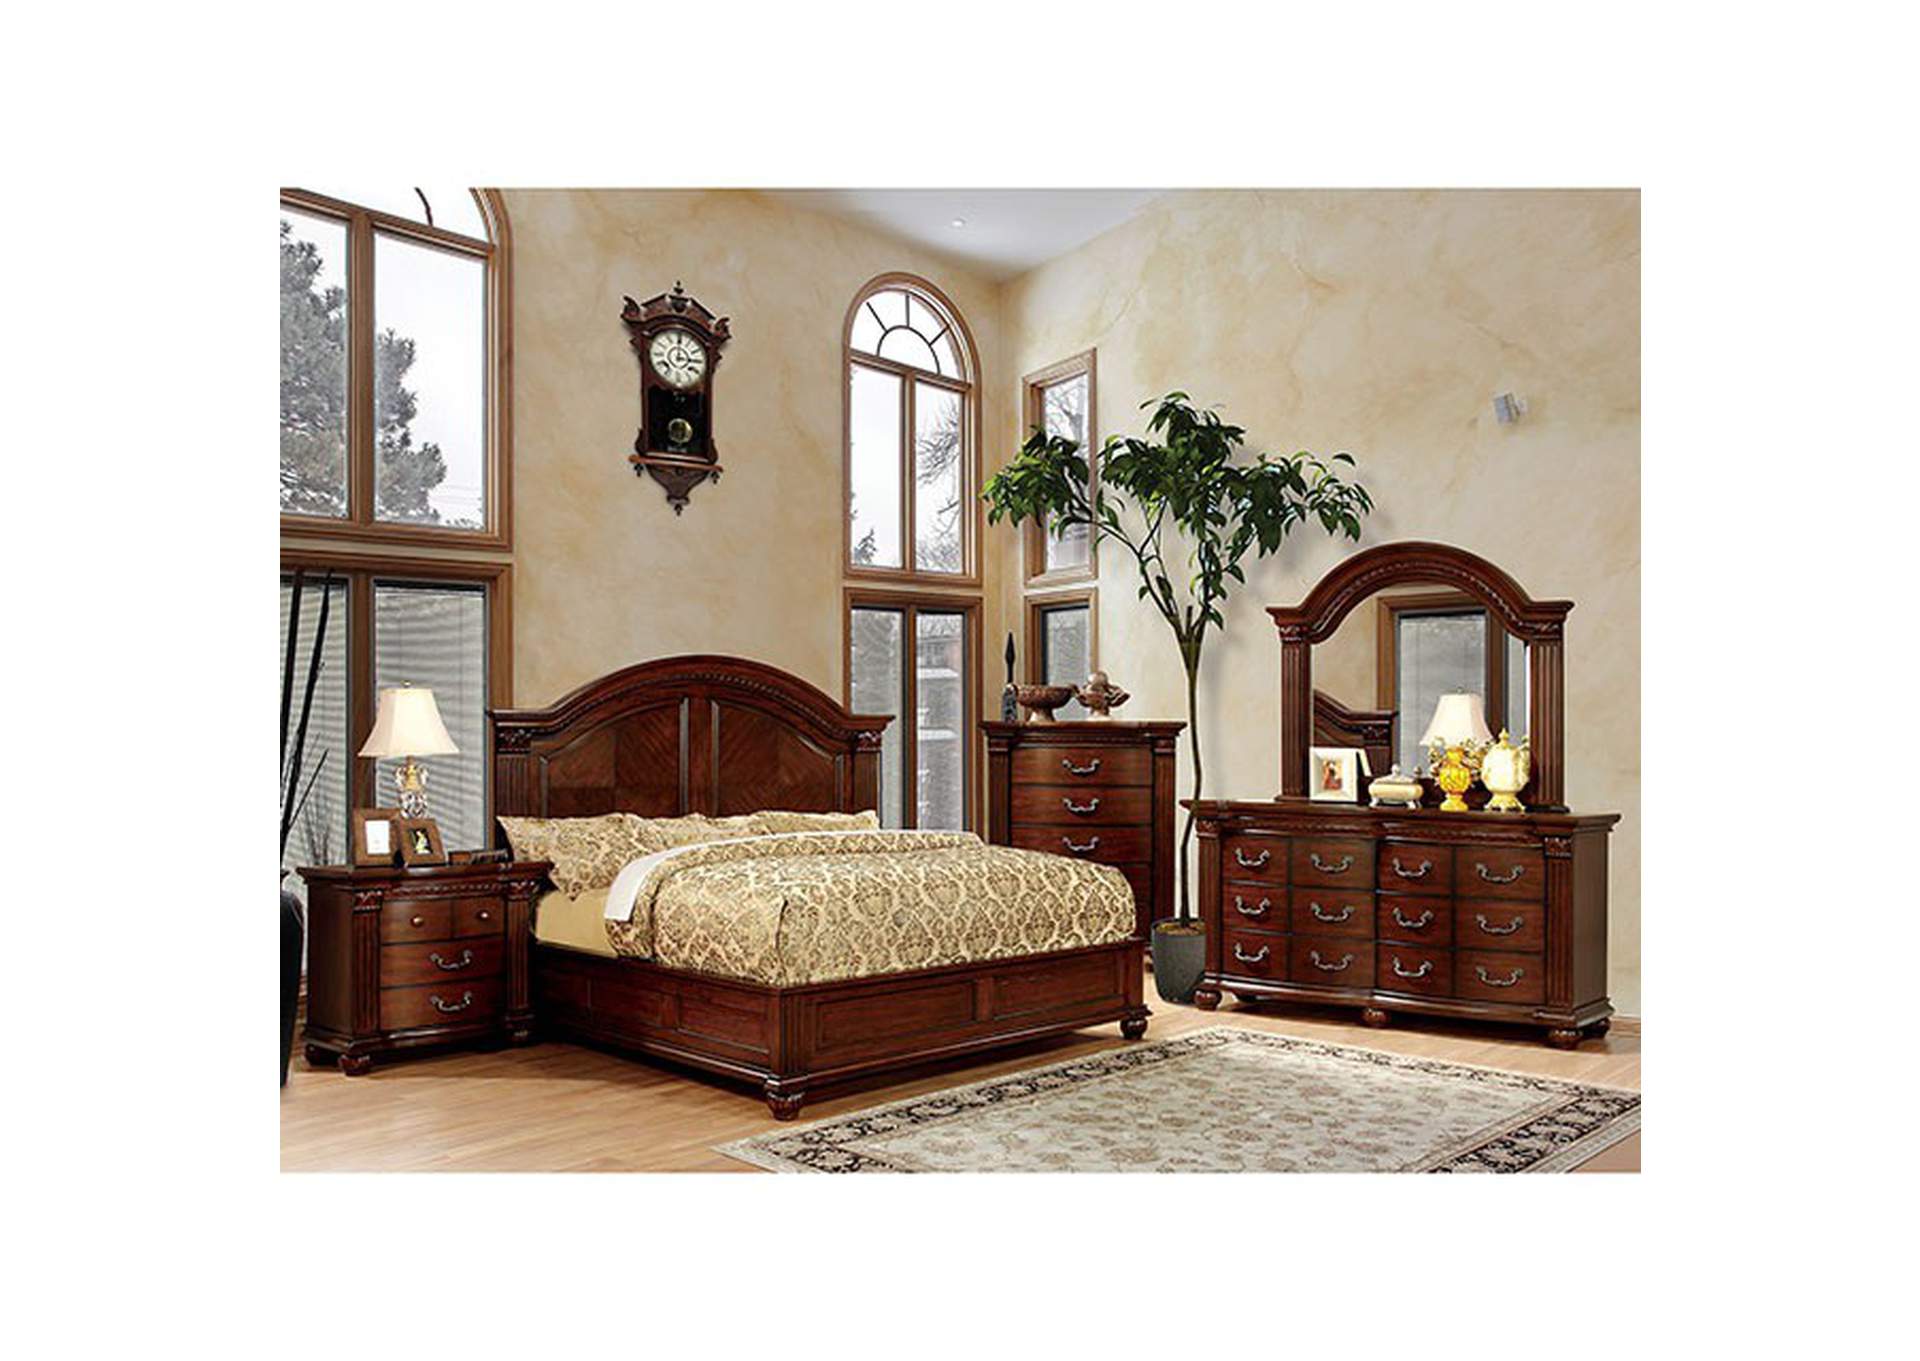 Grandom Queen Bed,Furniture of America